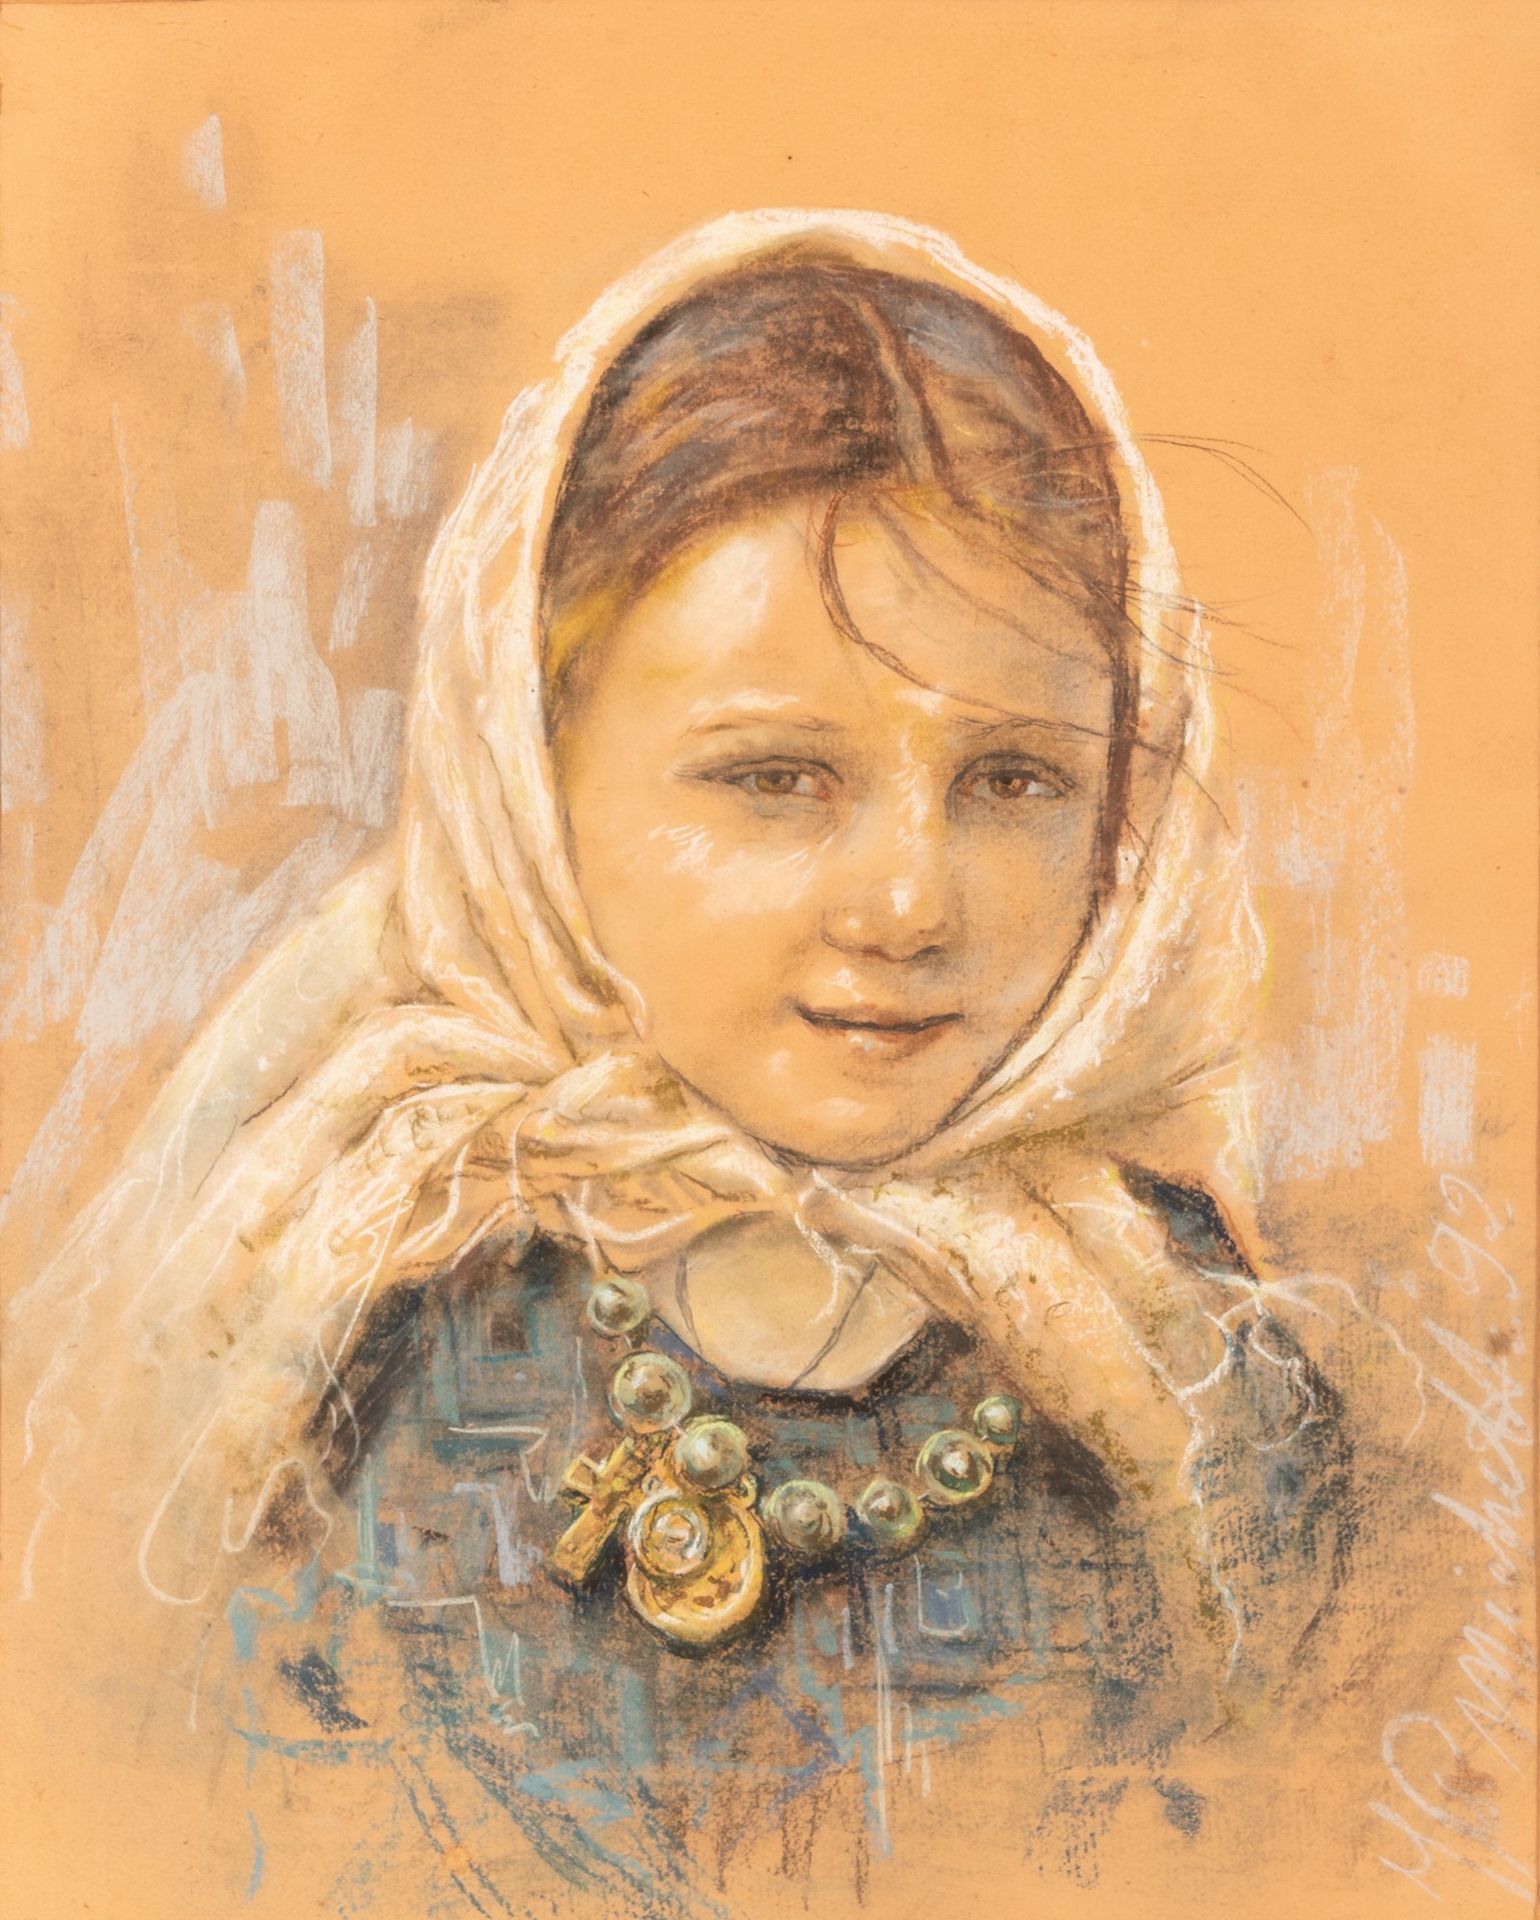 Ritratto di fanciulla 1892 纸上彩色粉笔55x45厘米，带框架80x67厘米 18922

署名 "Francesco Paolo M&hellip;